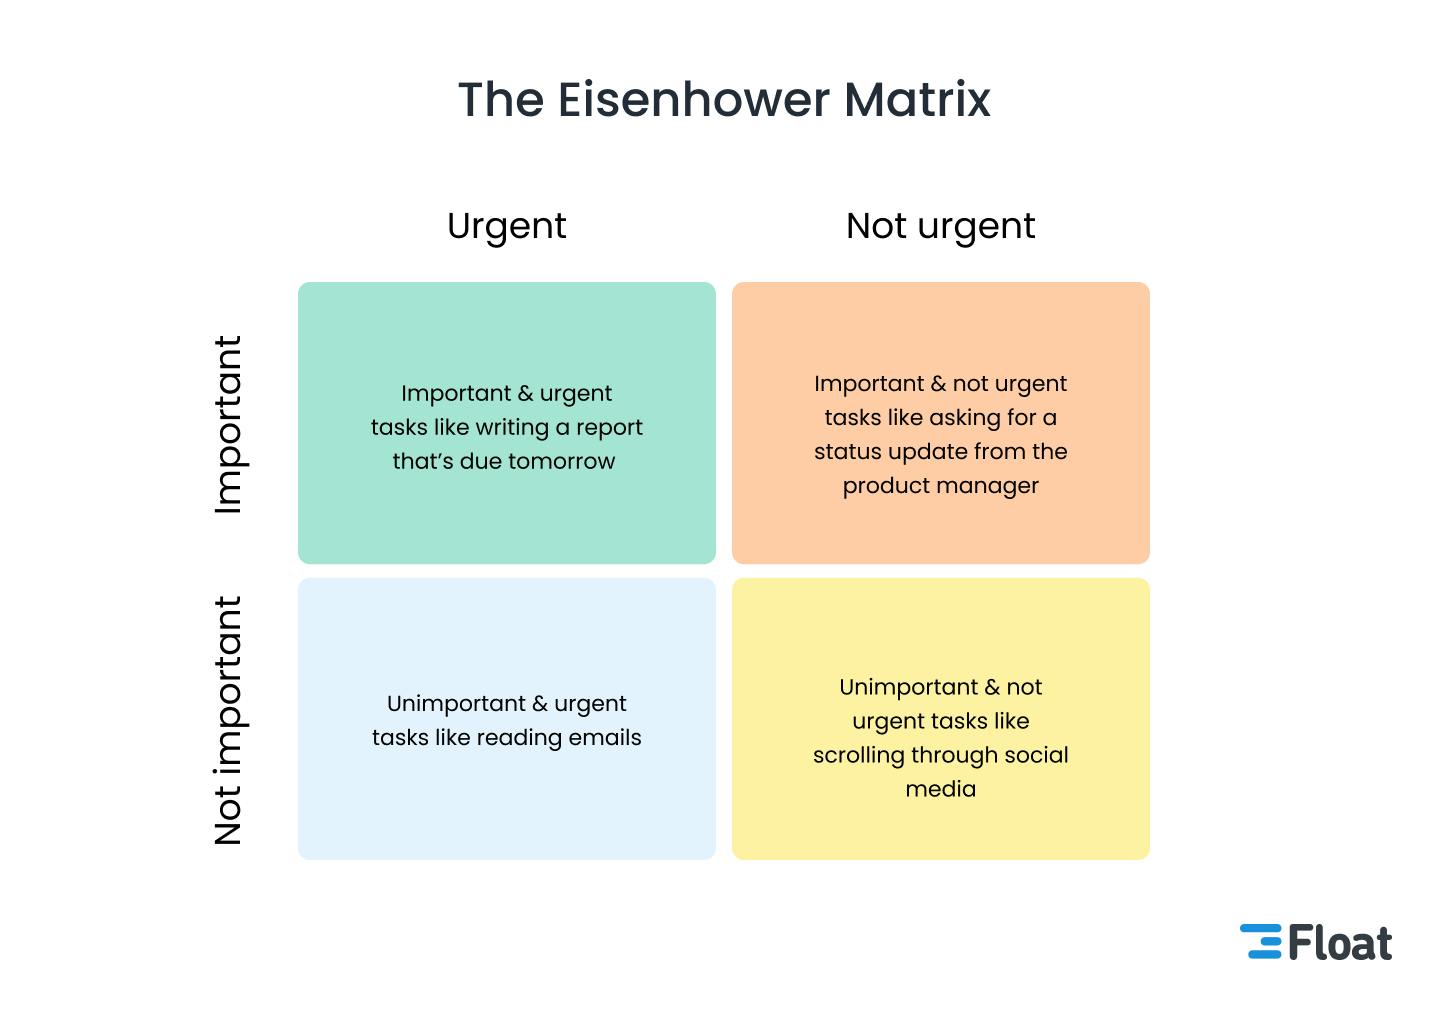 The Eisenhower matrix